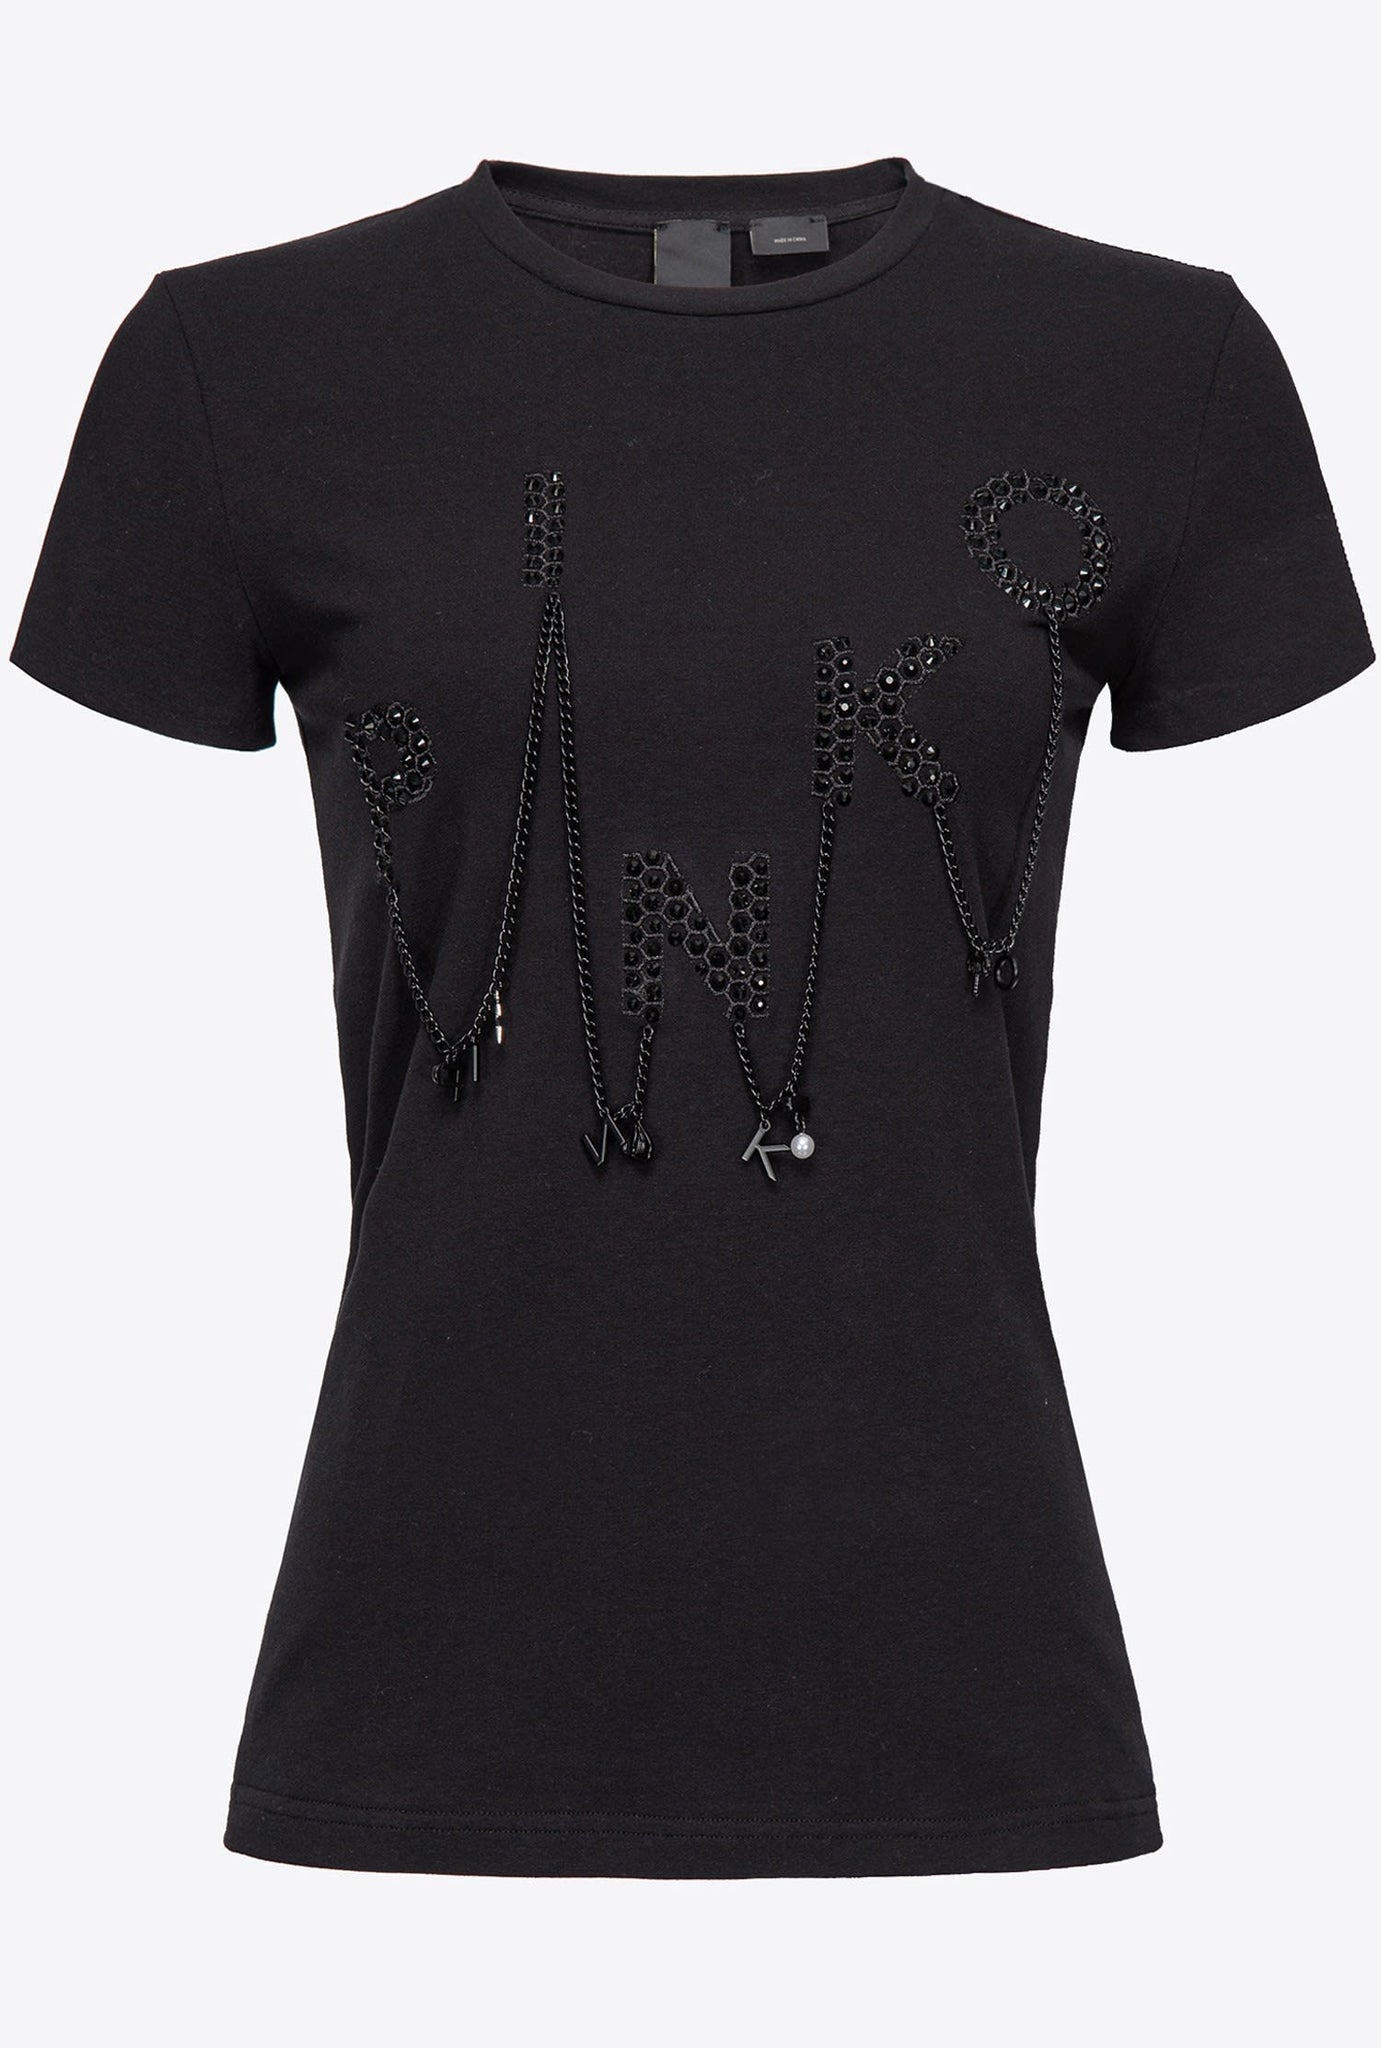 T-Shirt gioiello Pinko / Nero - Ideal Moda